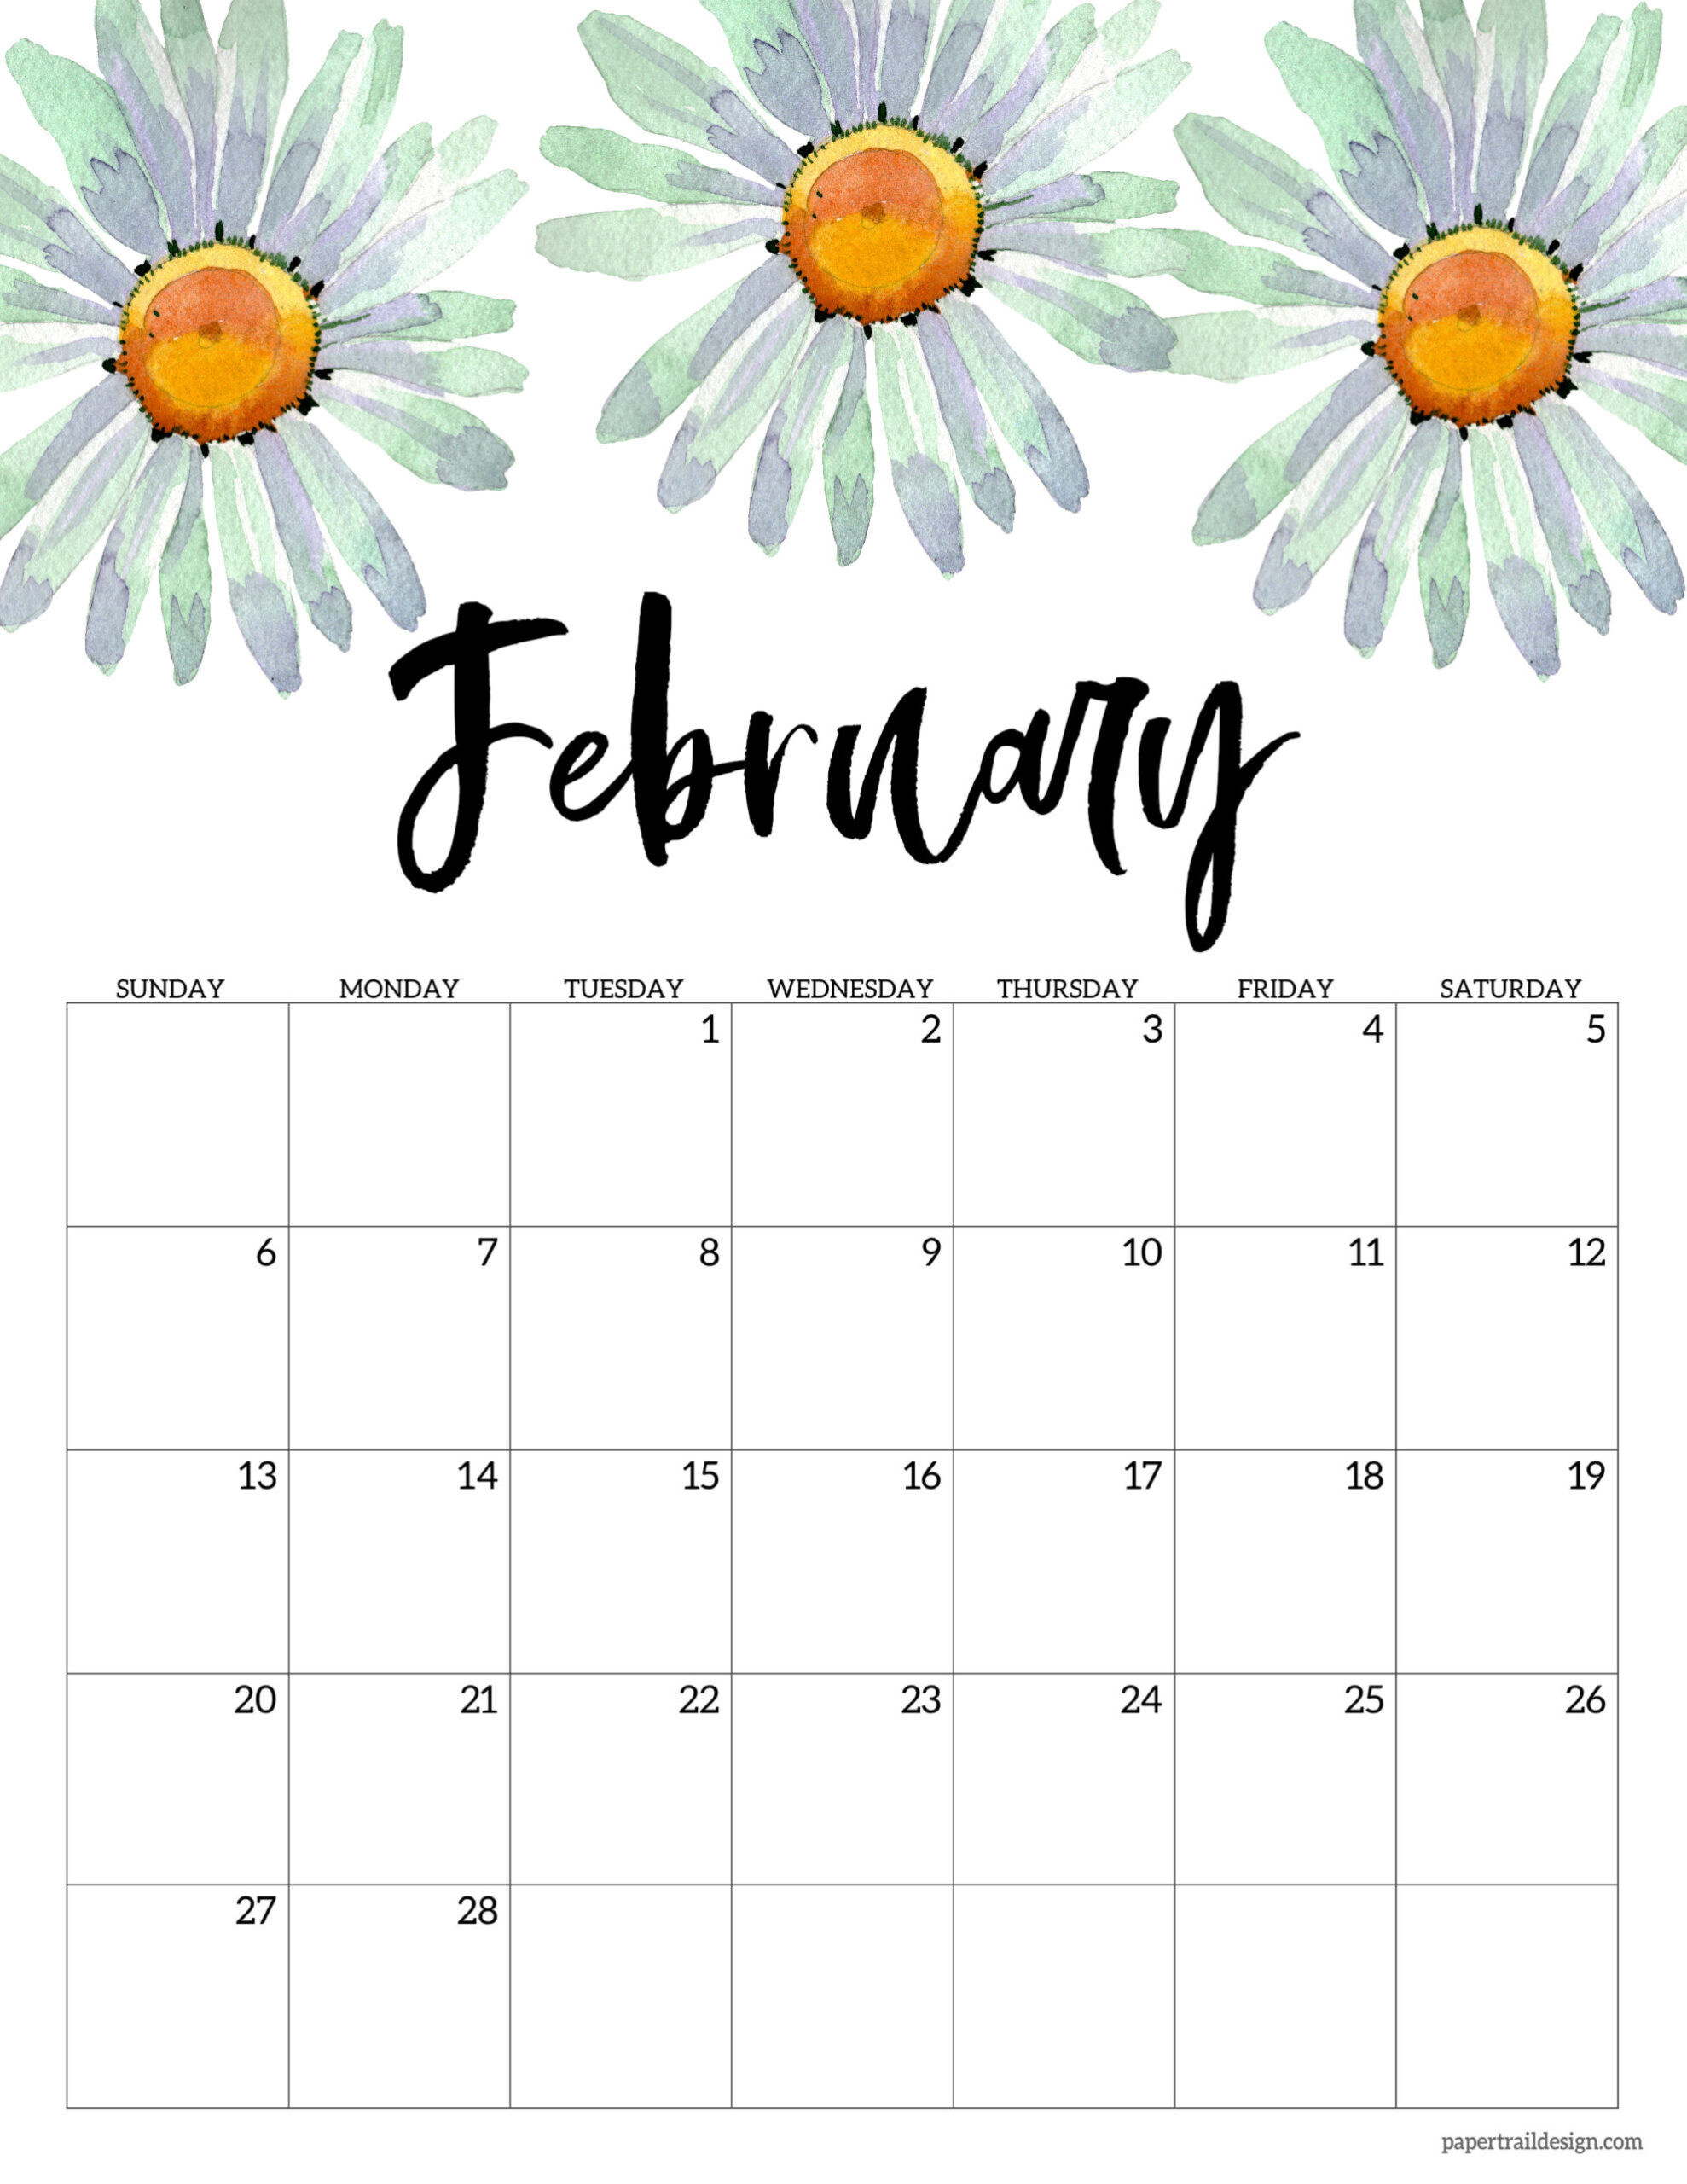 2022 Free Printable Calendar - Floral | Paper Trail Design  Free Printable Calendar 2022 Without Download